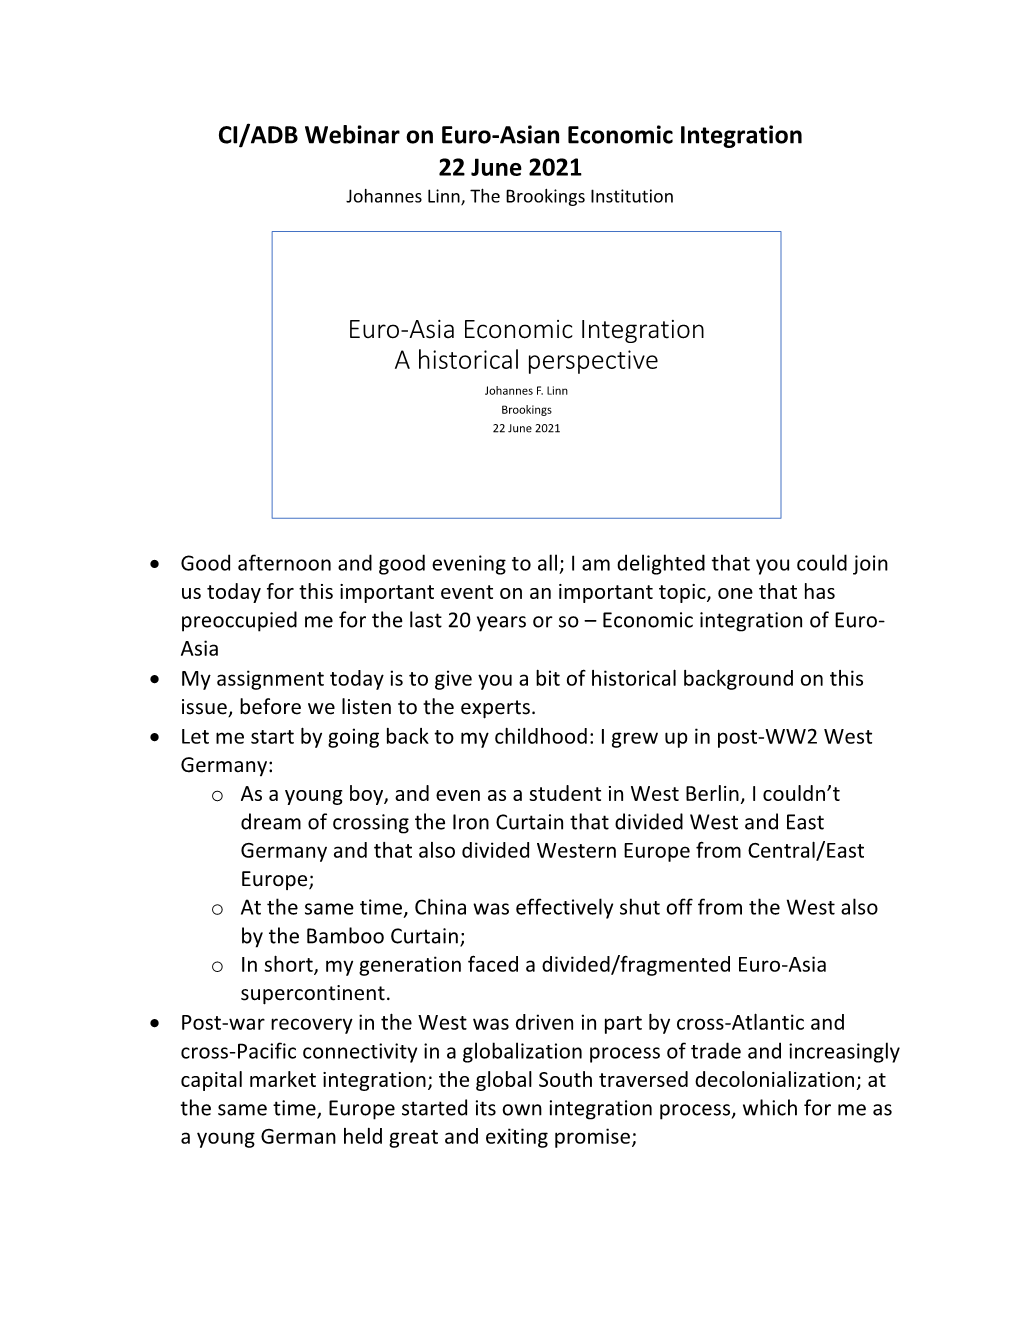 Euro-Asia Economic Integration a Historical Perspective Johannes F